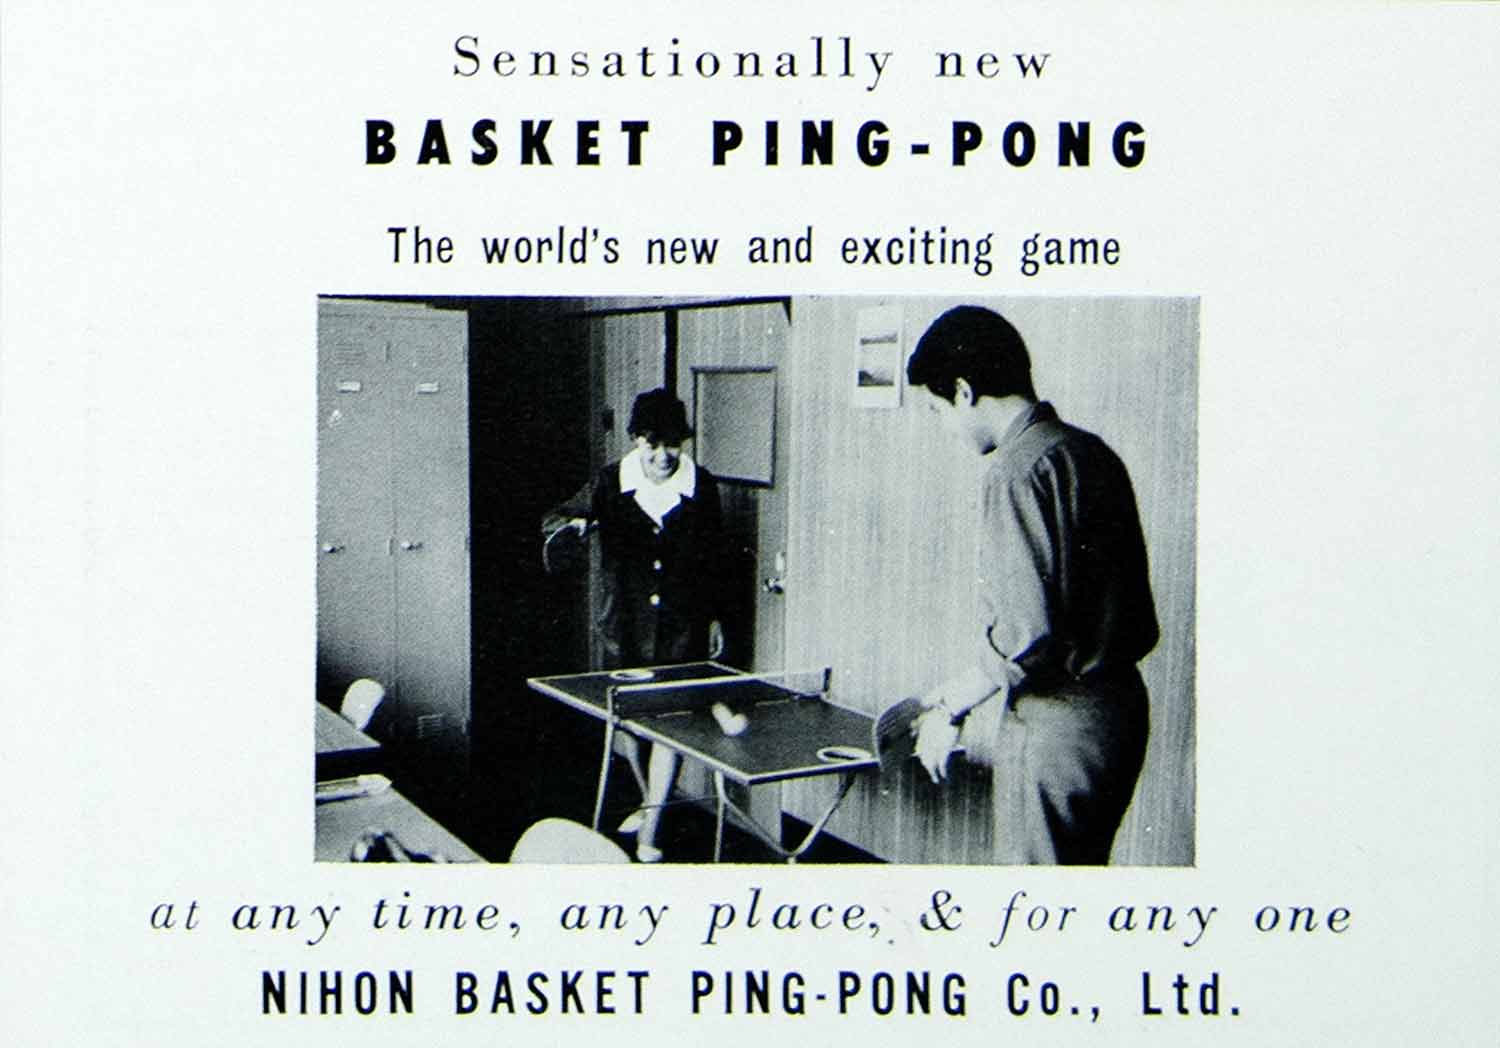 1968 Ad Pasket Ping-Pong Nihon Japanese Table Tennis Sport Paddle Net Game XGGD7